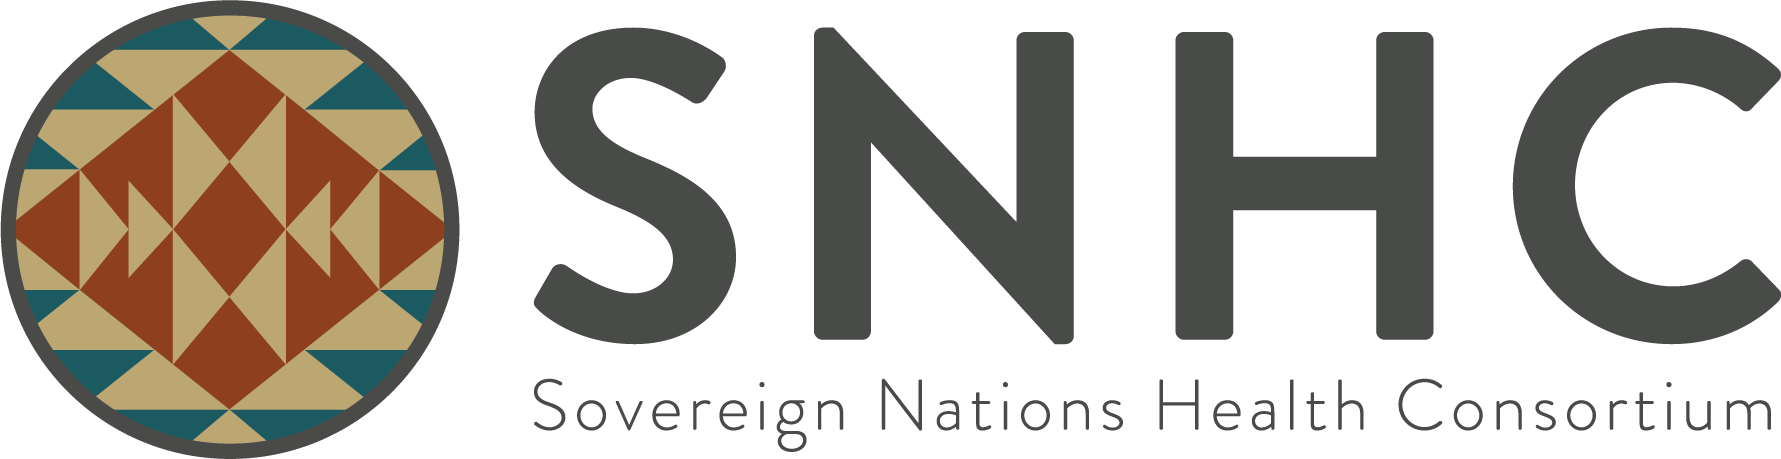 Sovereign Nations Health Consortium